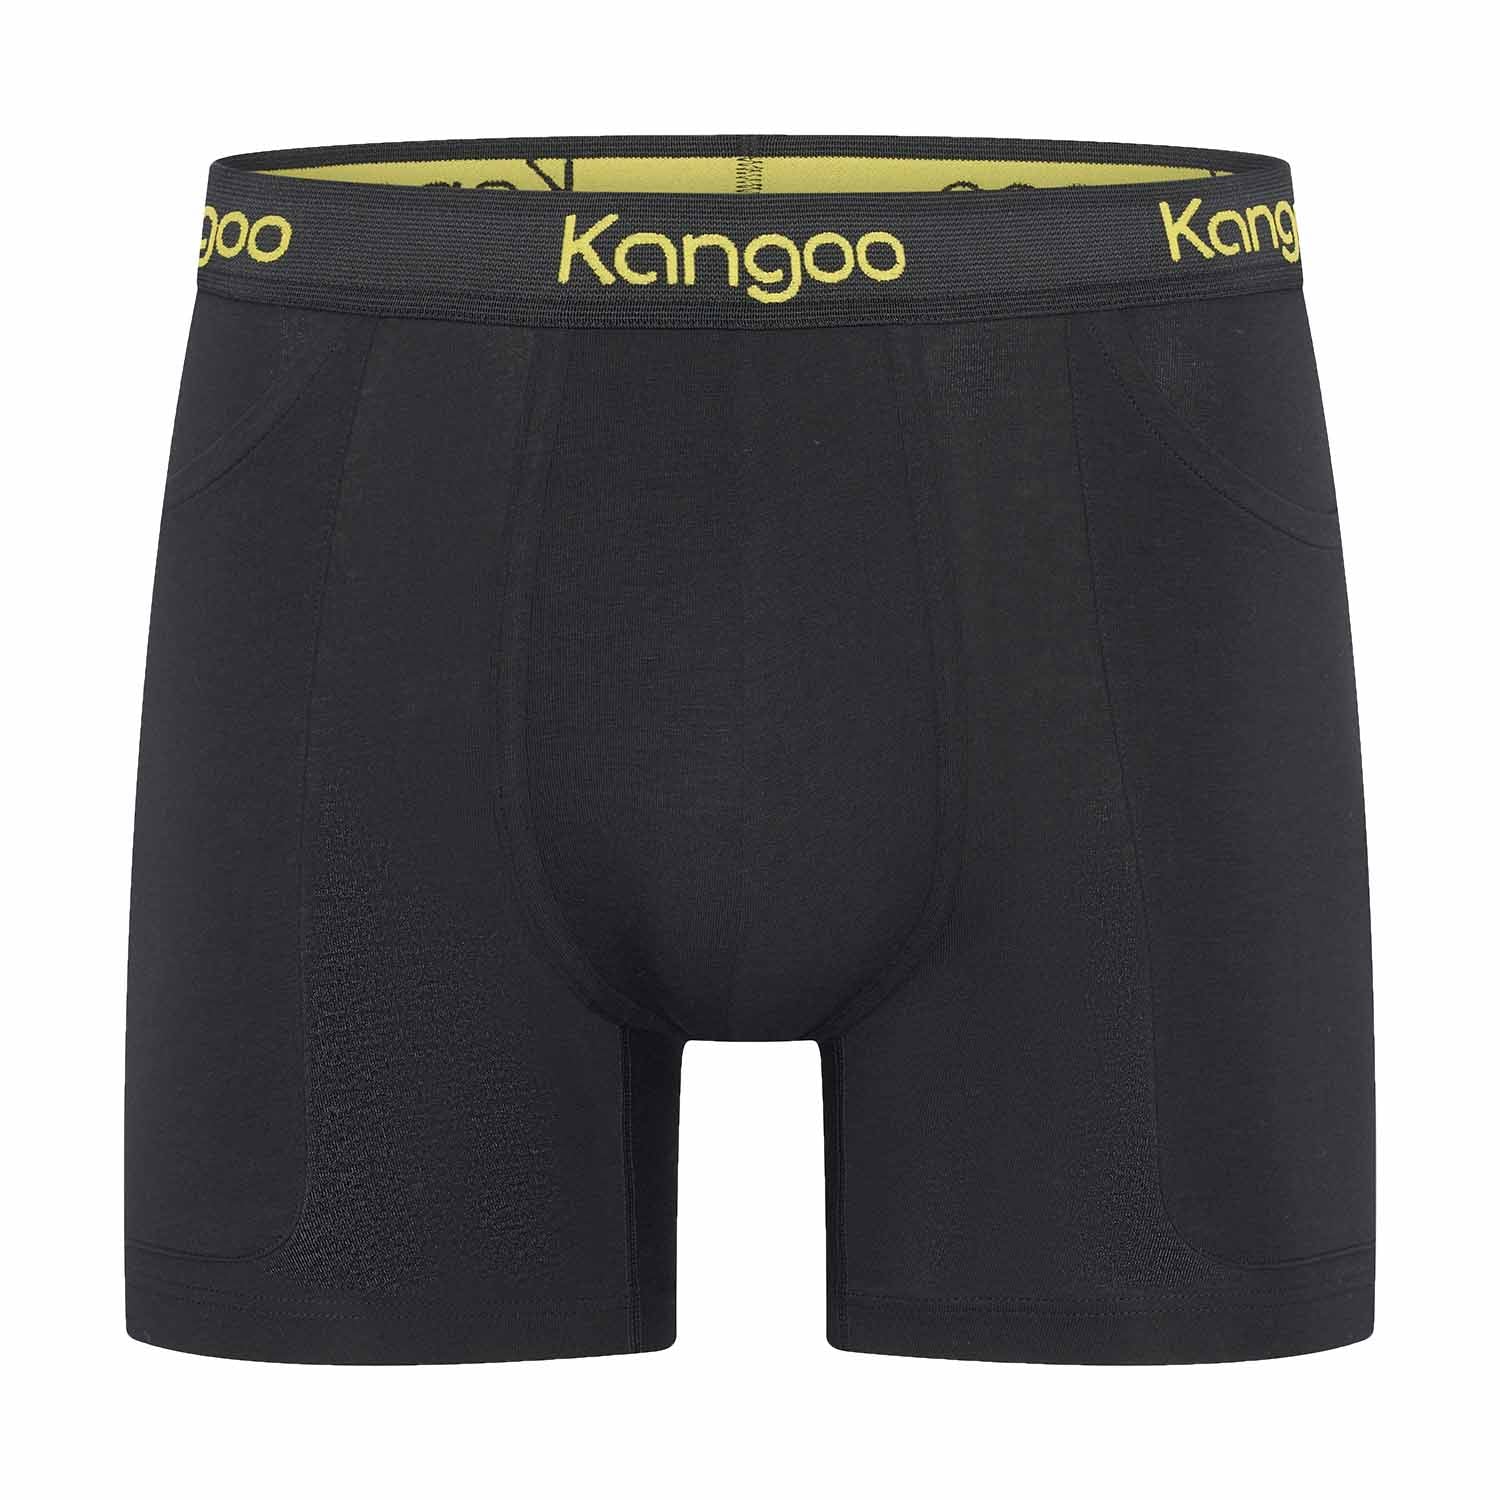 Kangoo | Black & Yellow